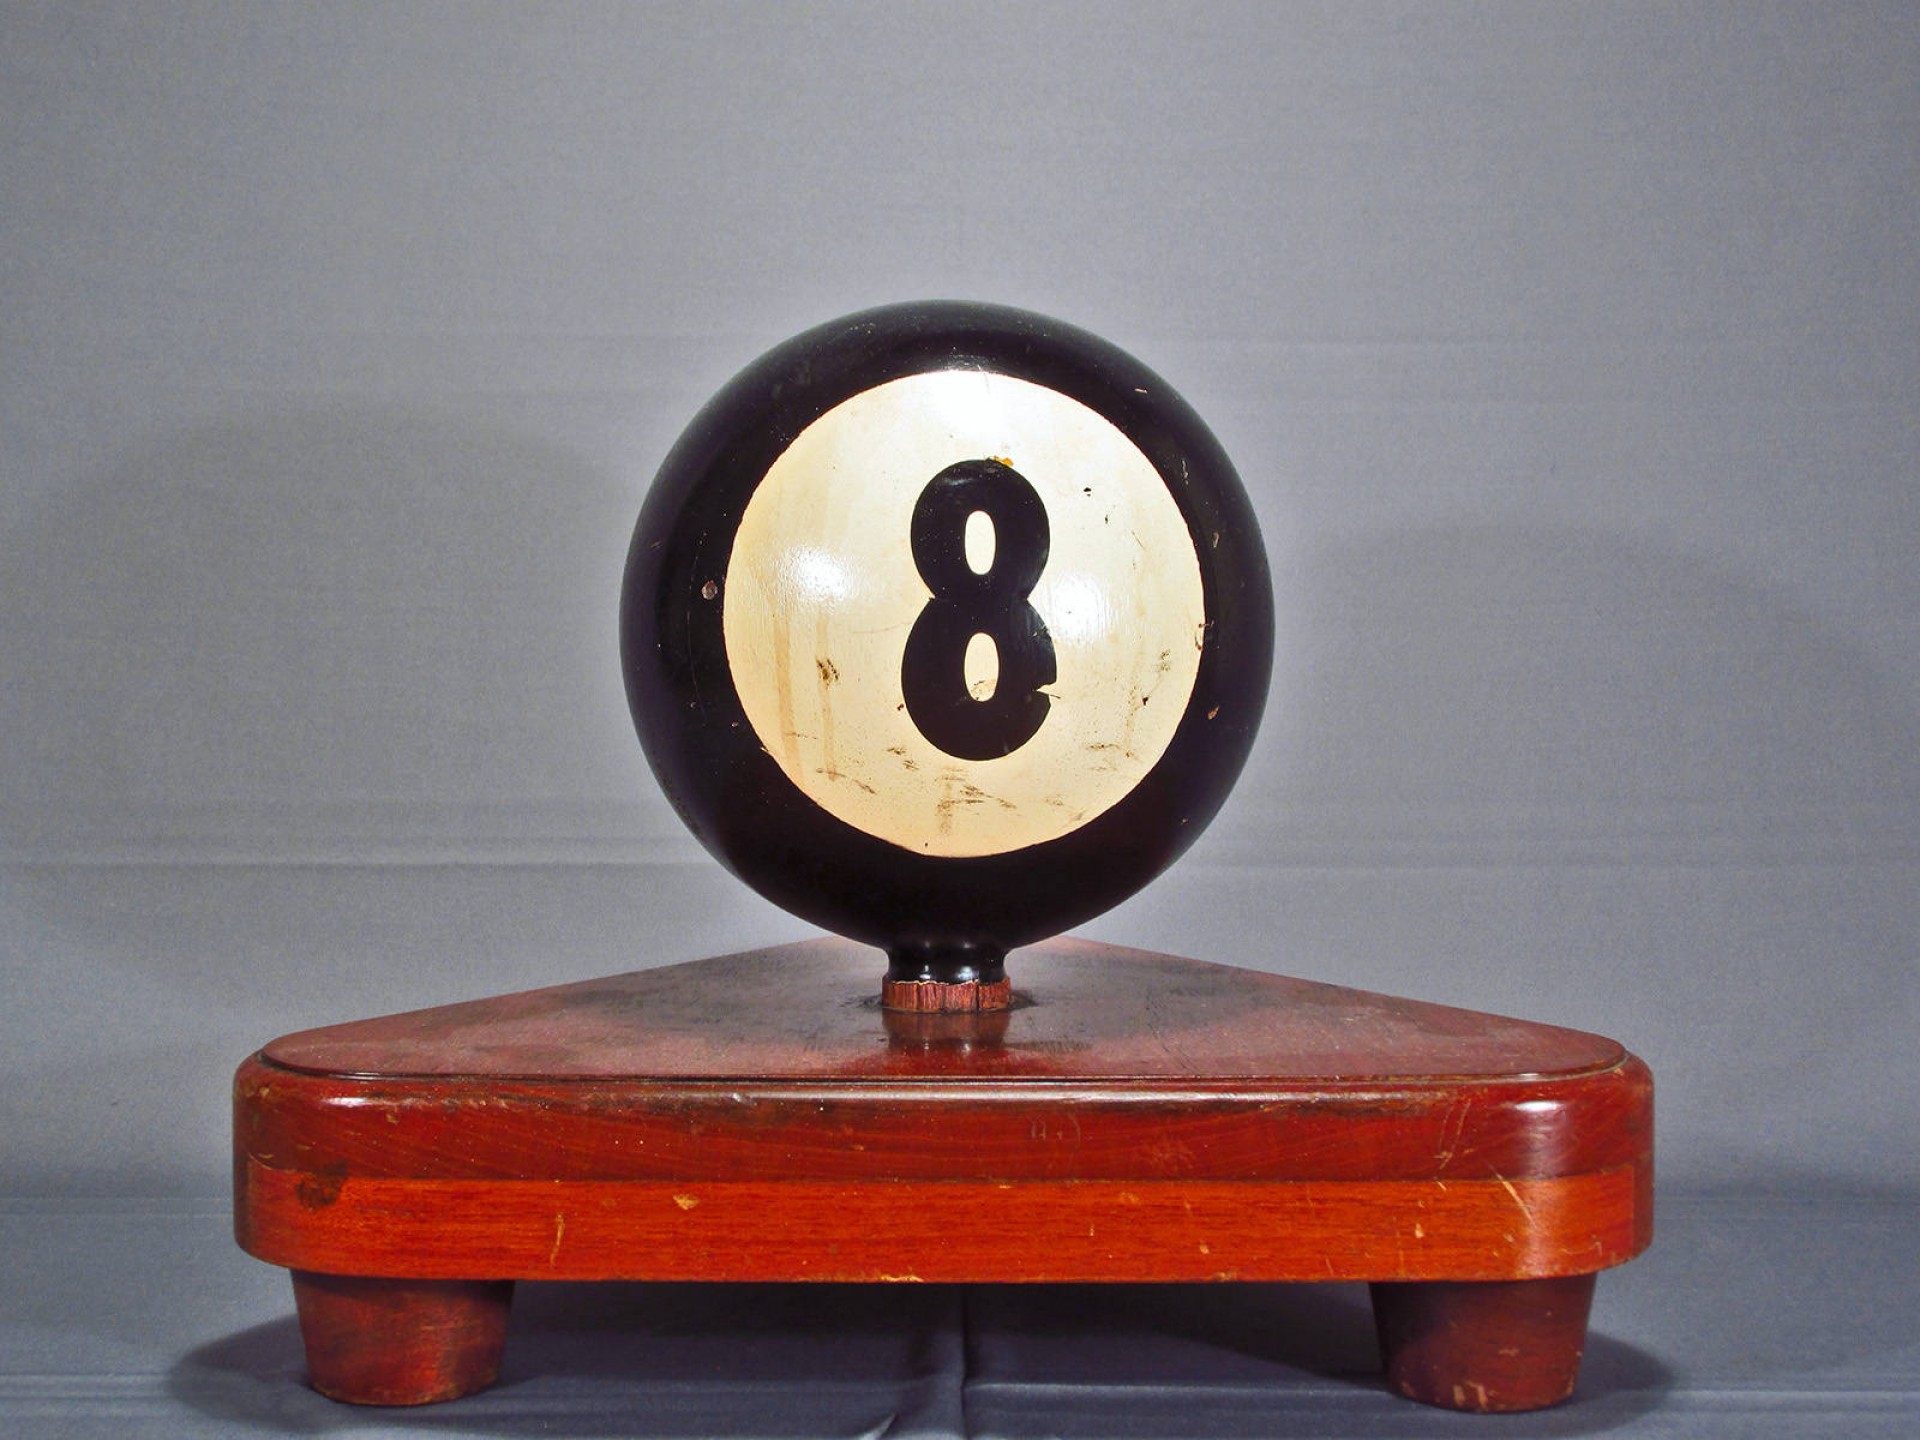 1920x1440 Vintage Magic 8 Ball: Vintage Eight Ball Wooden Sculpture On